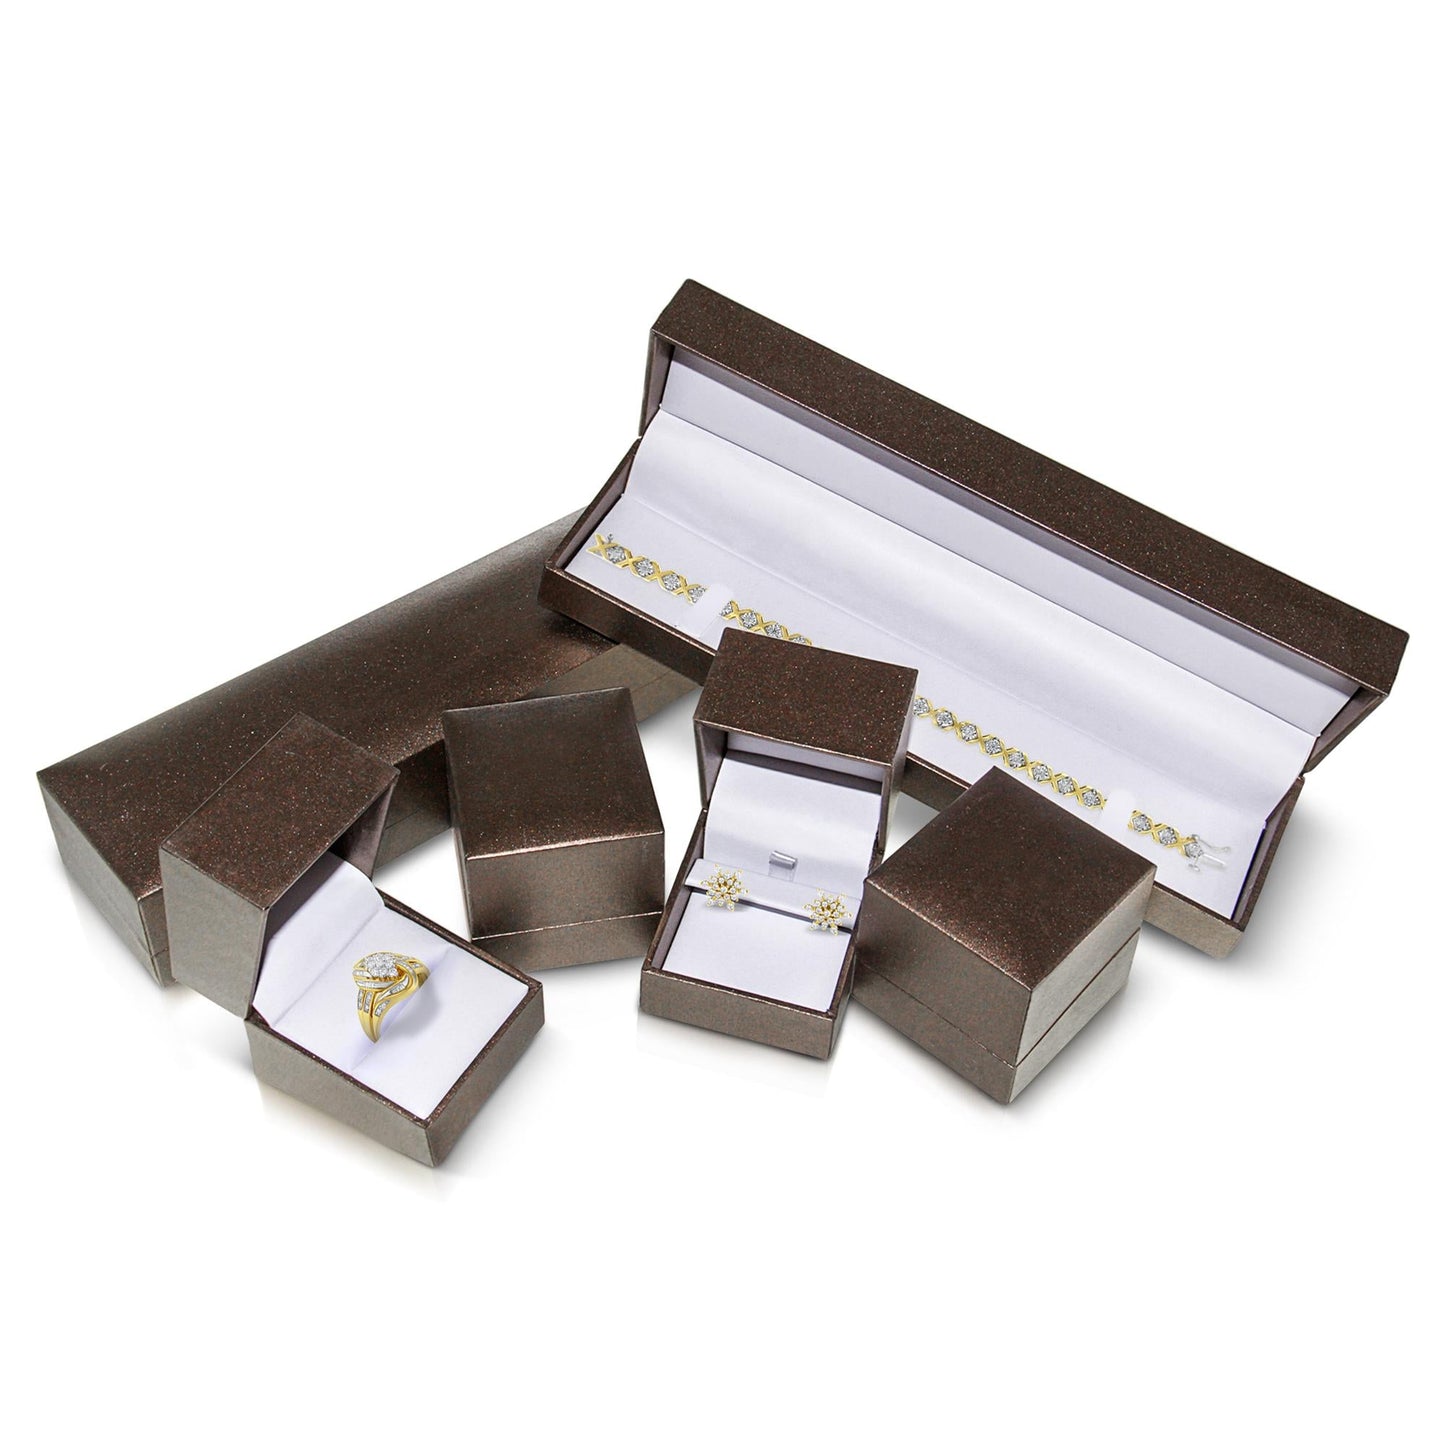 IGI Certified 1.0 Cttw Diamond 18K White Gold Channel-Set Half-Eternity Band Wedding Ring (E-F Color, I1-I2 Clarity)